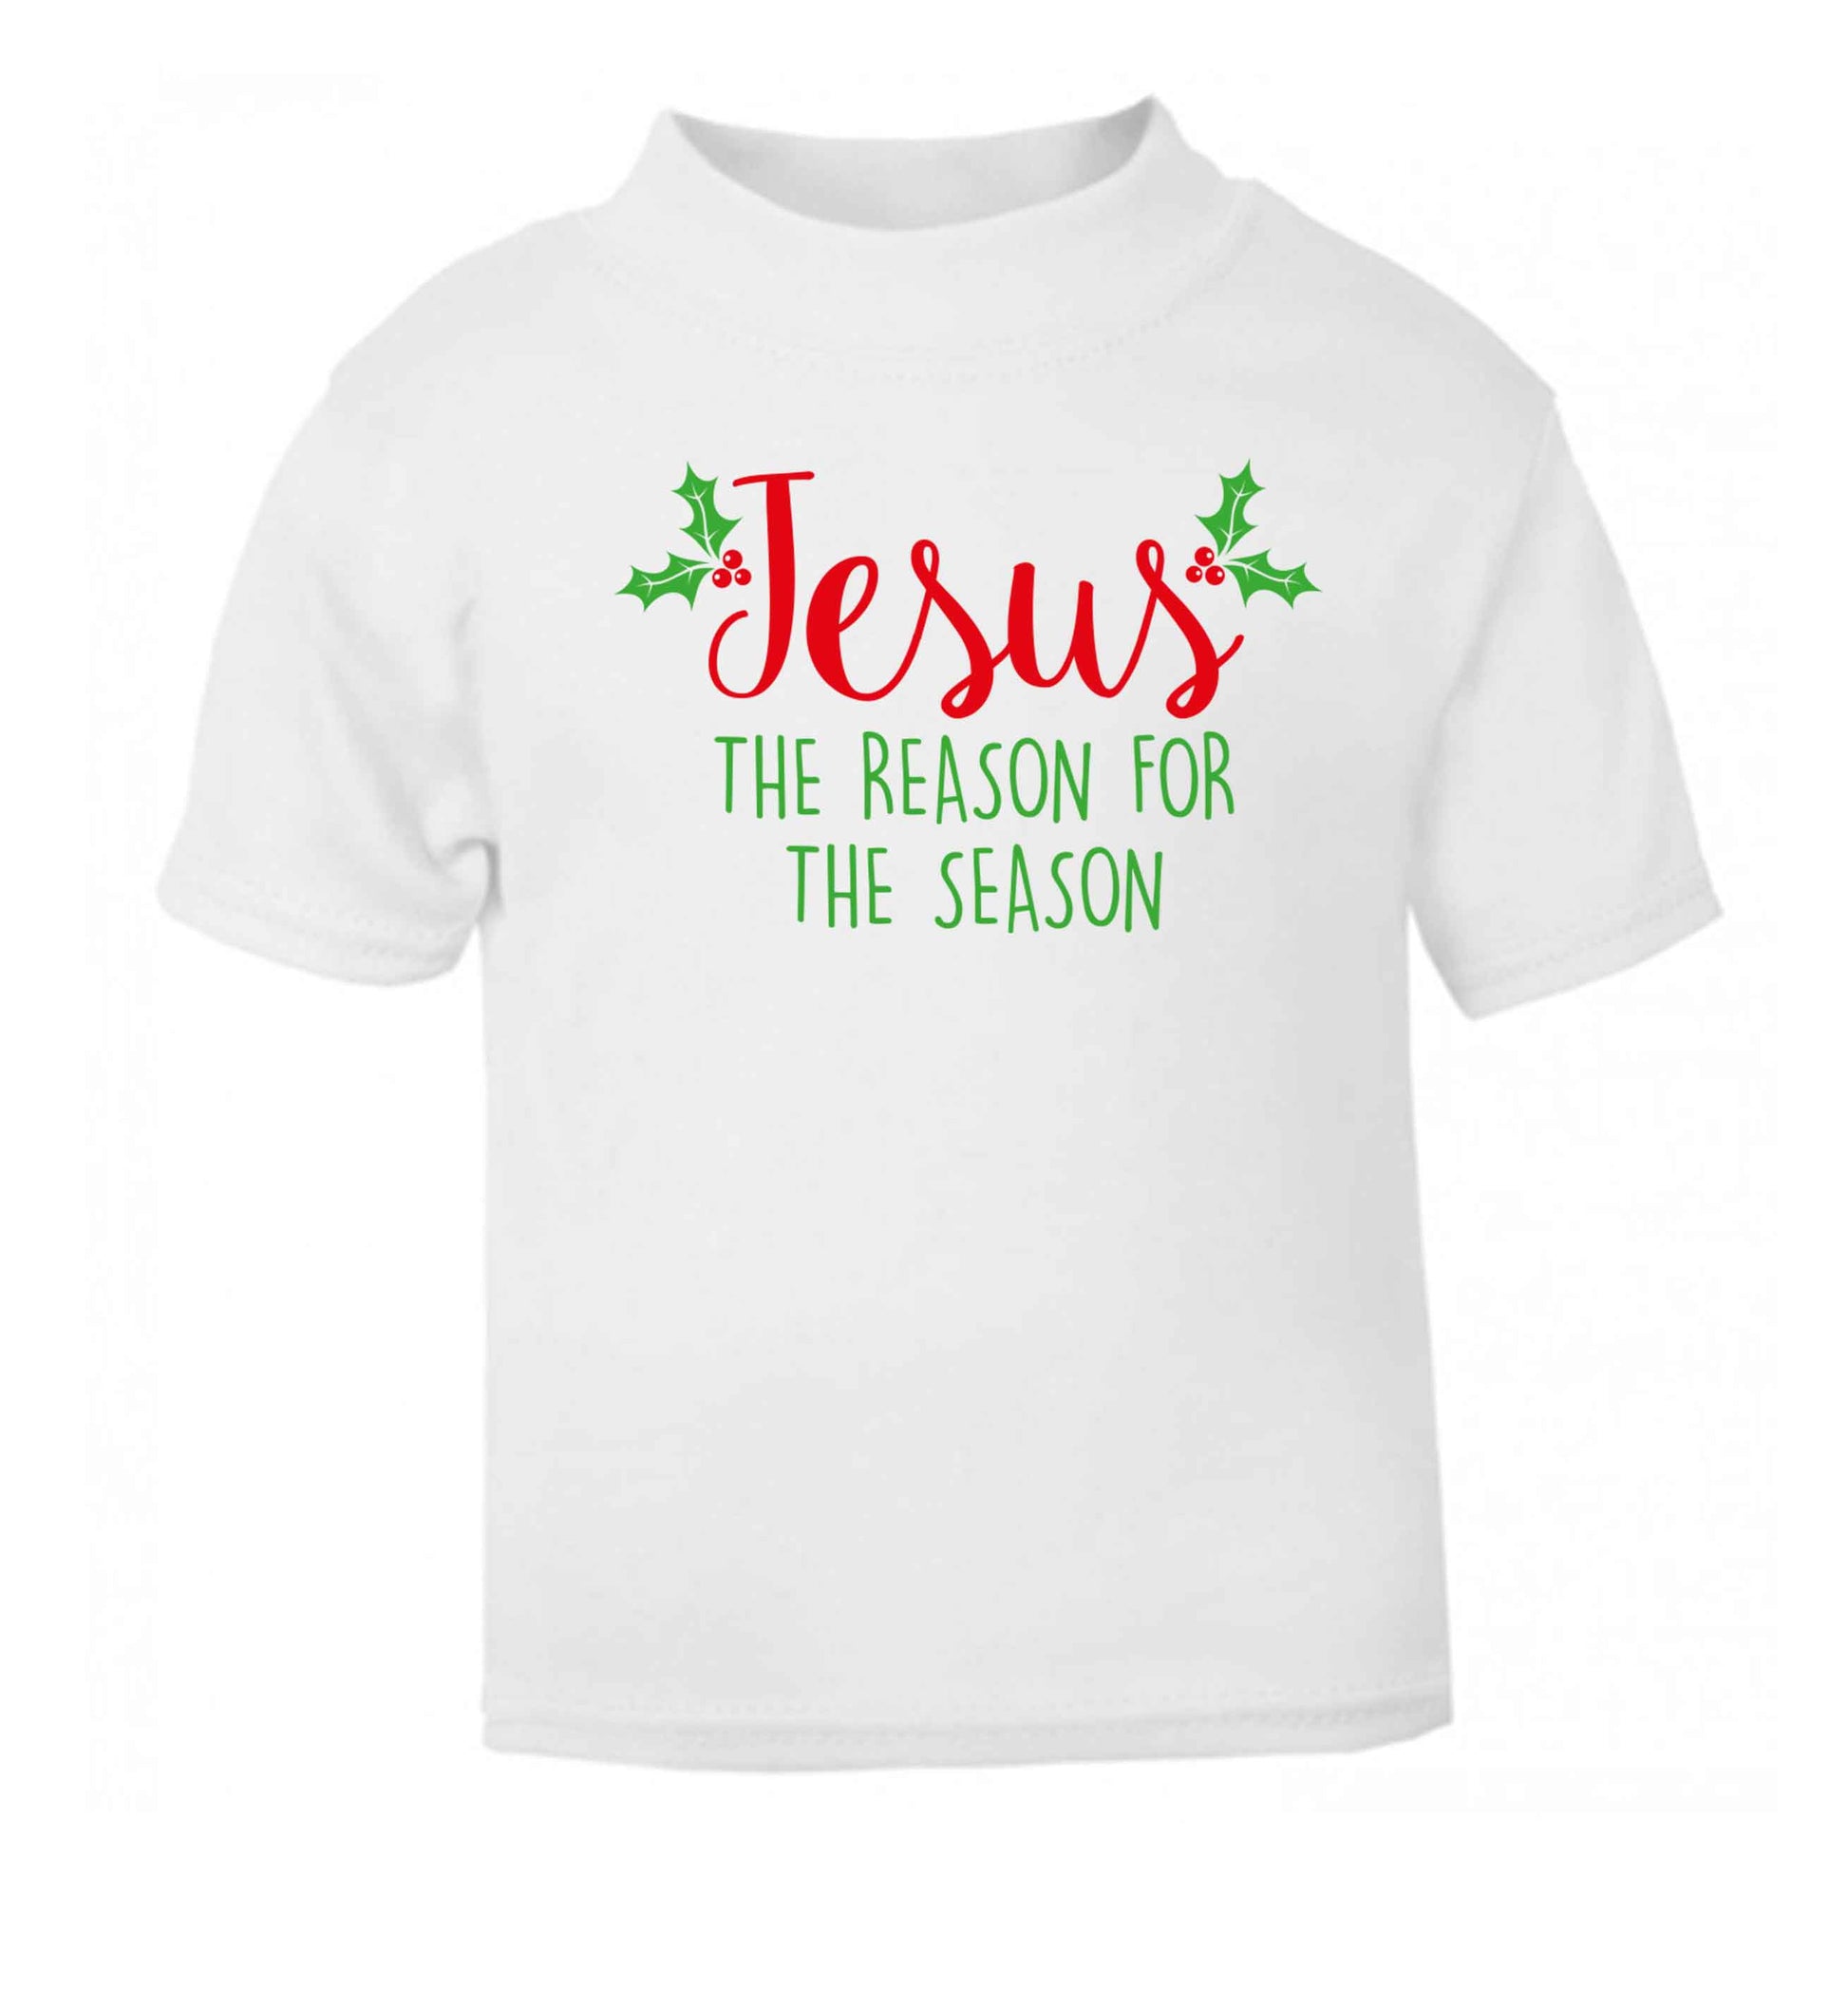 Jesus the reason for the season white baby toddler Tshirt 2 Years